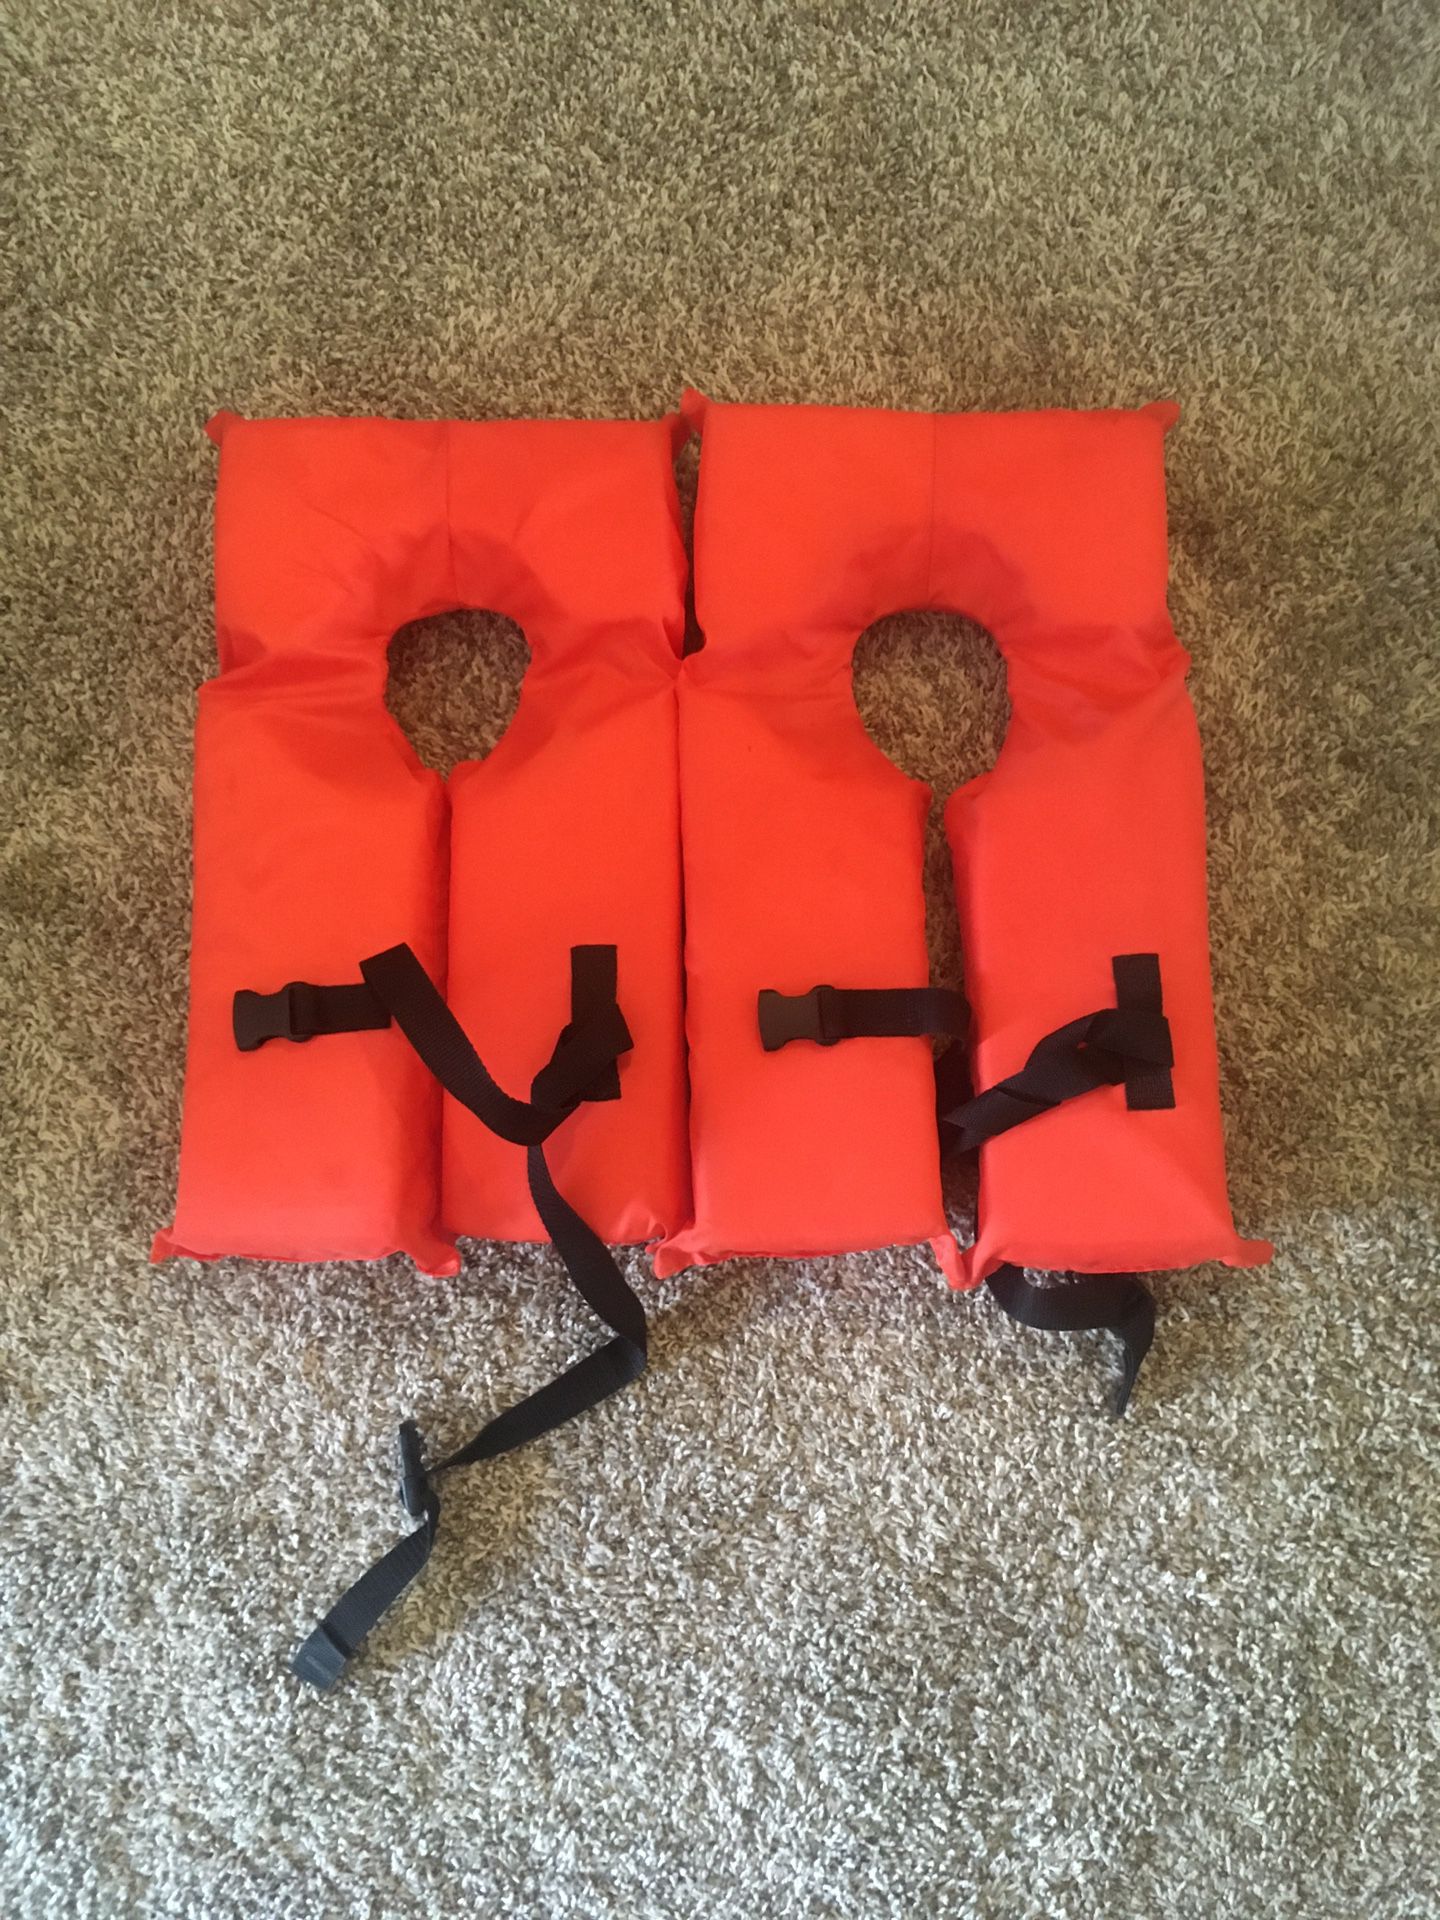 Two children’s life vests